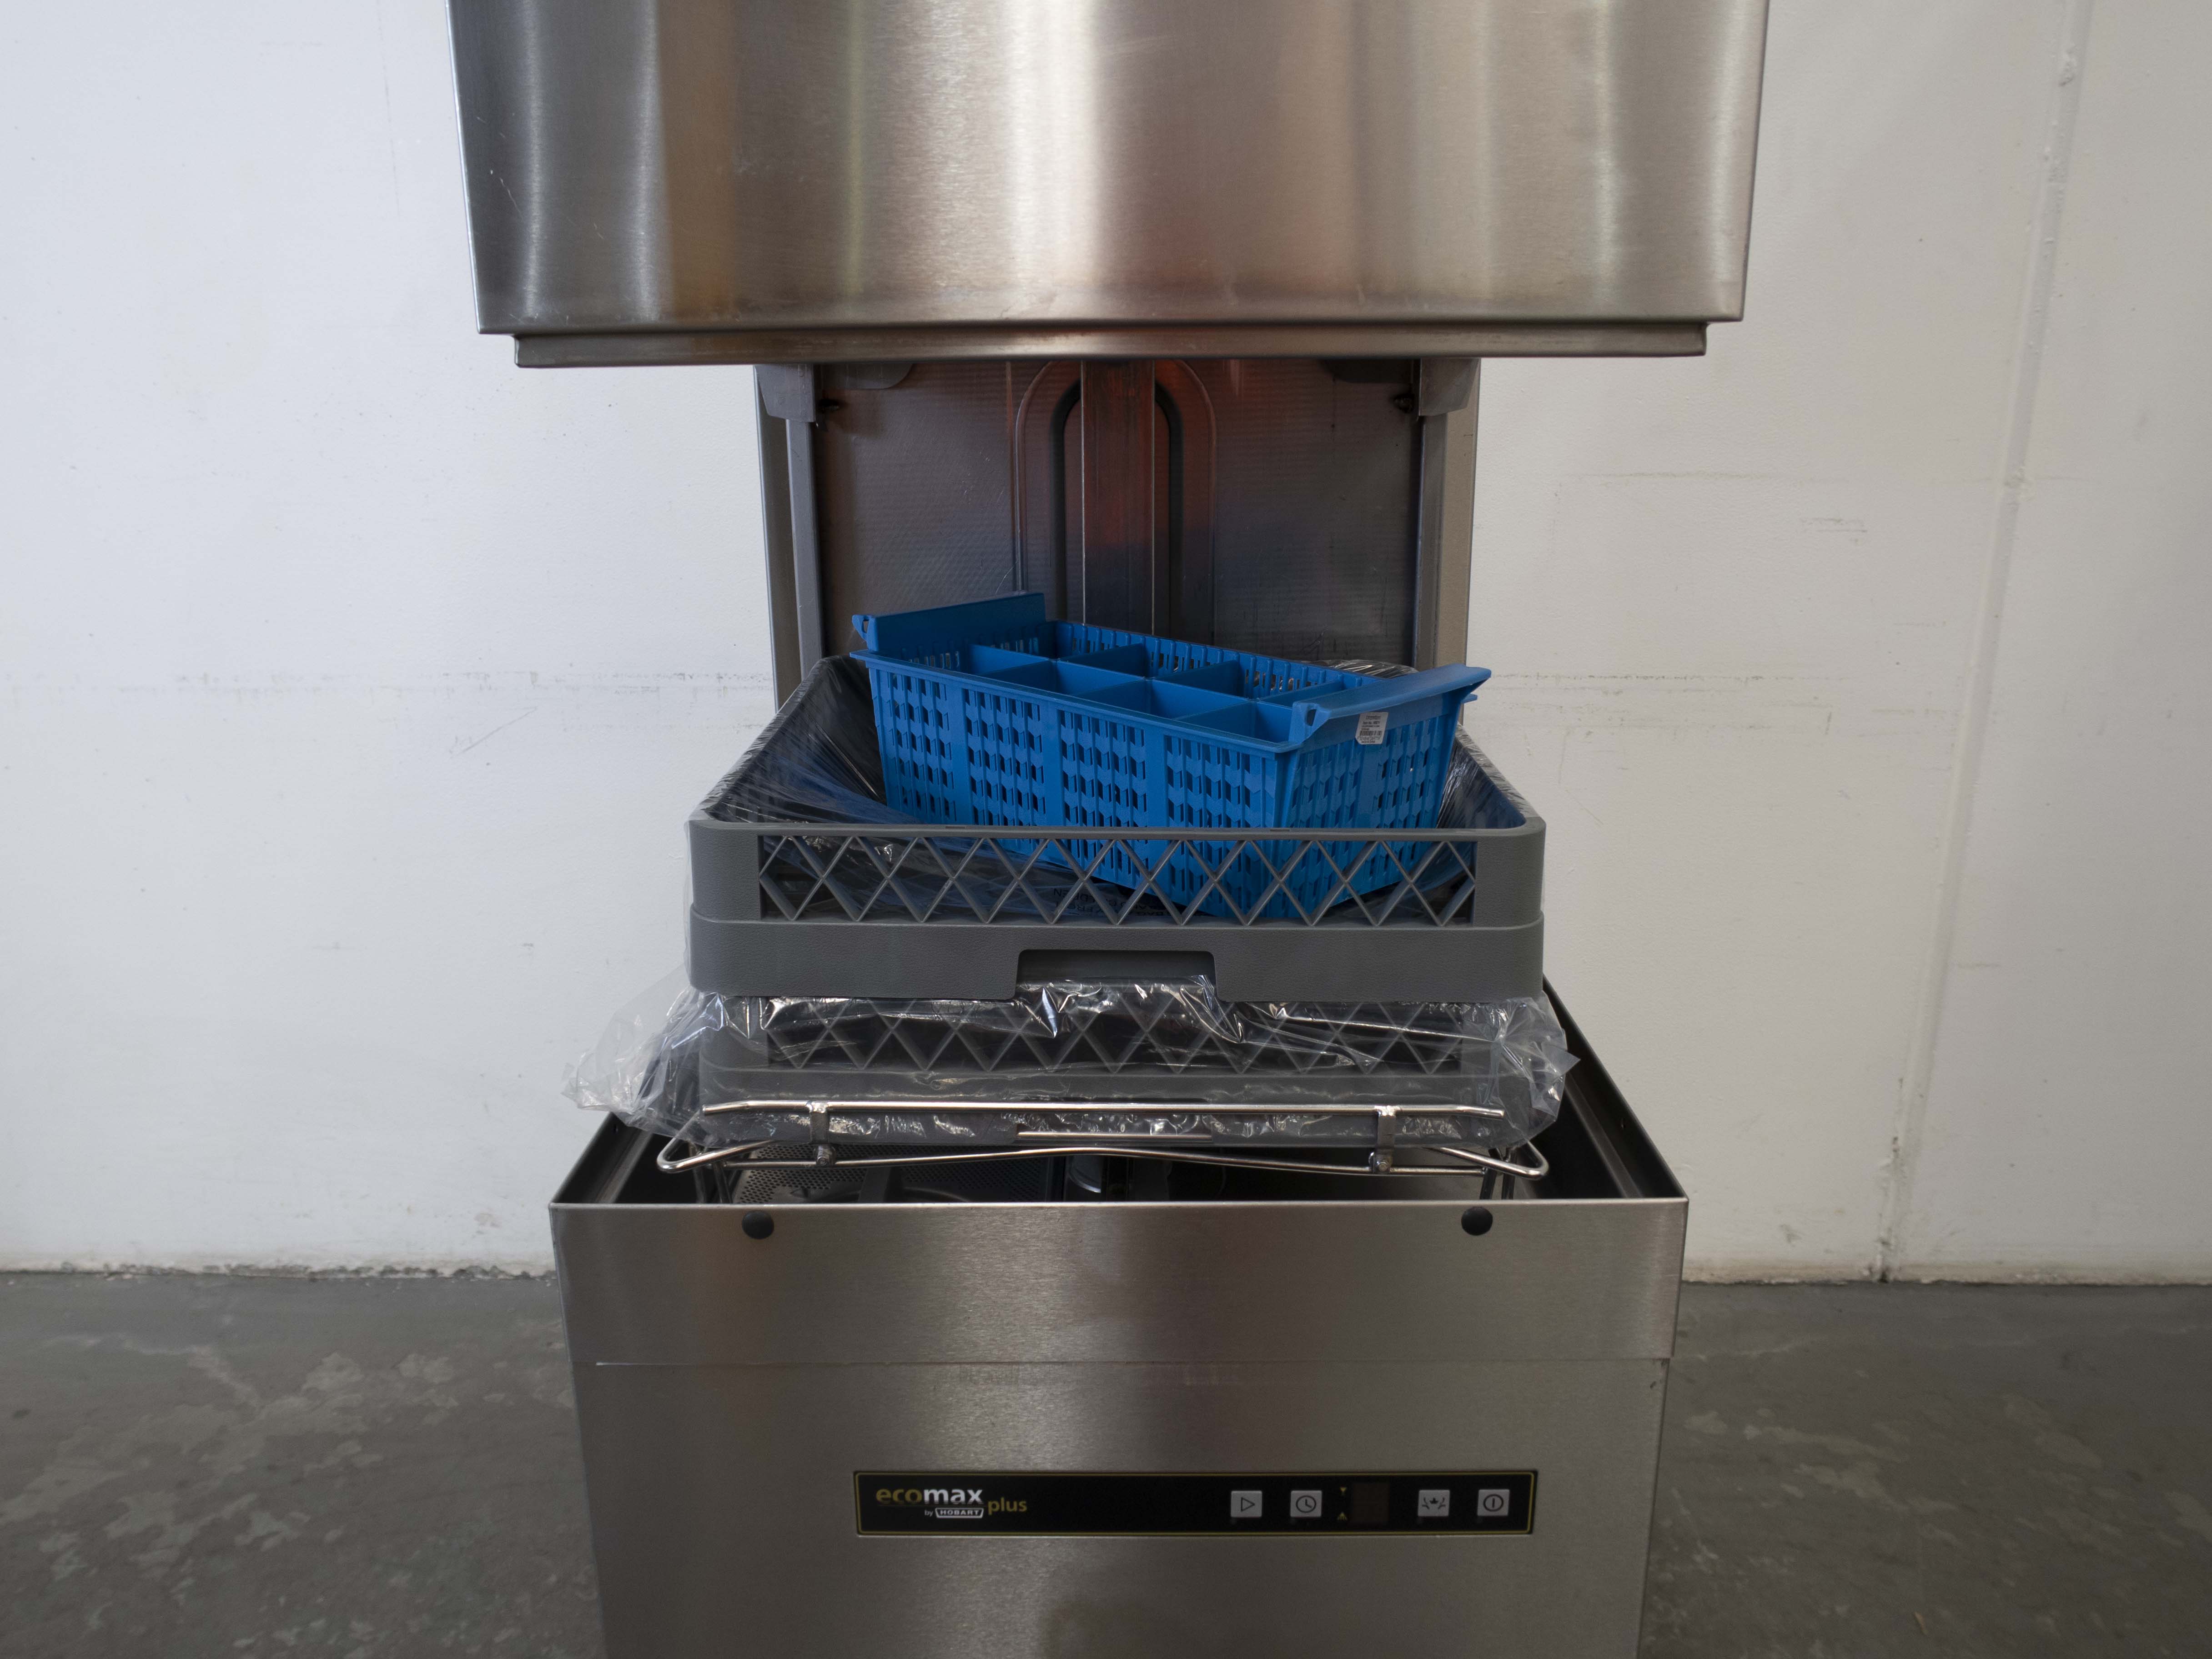 Thumbnail - Hobart Ecomax Plus H615 Passthrough Dishwasher